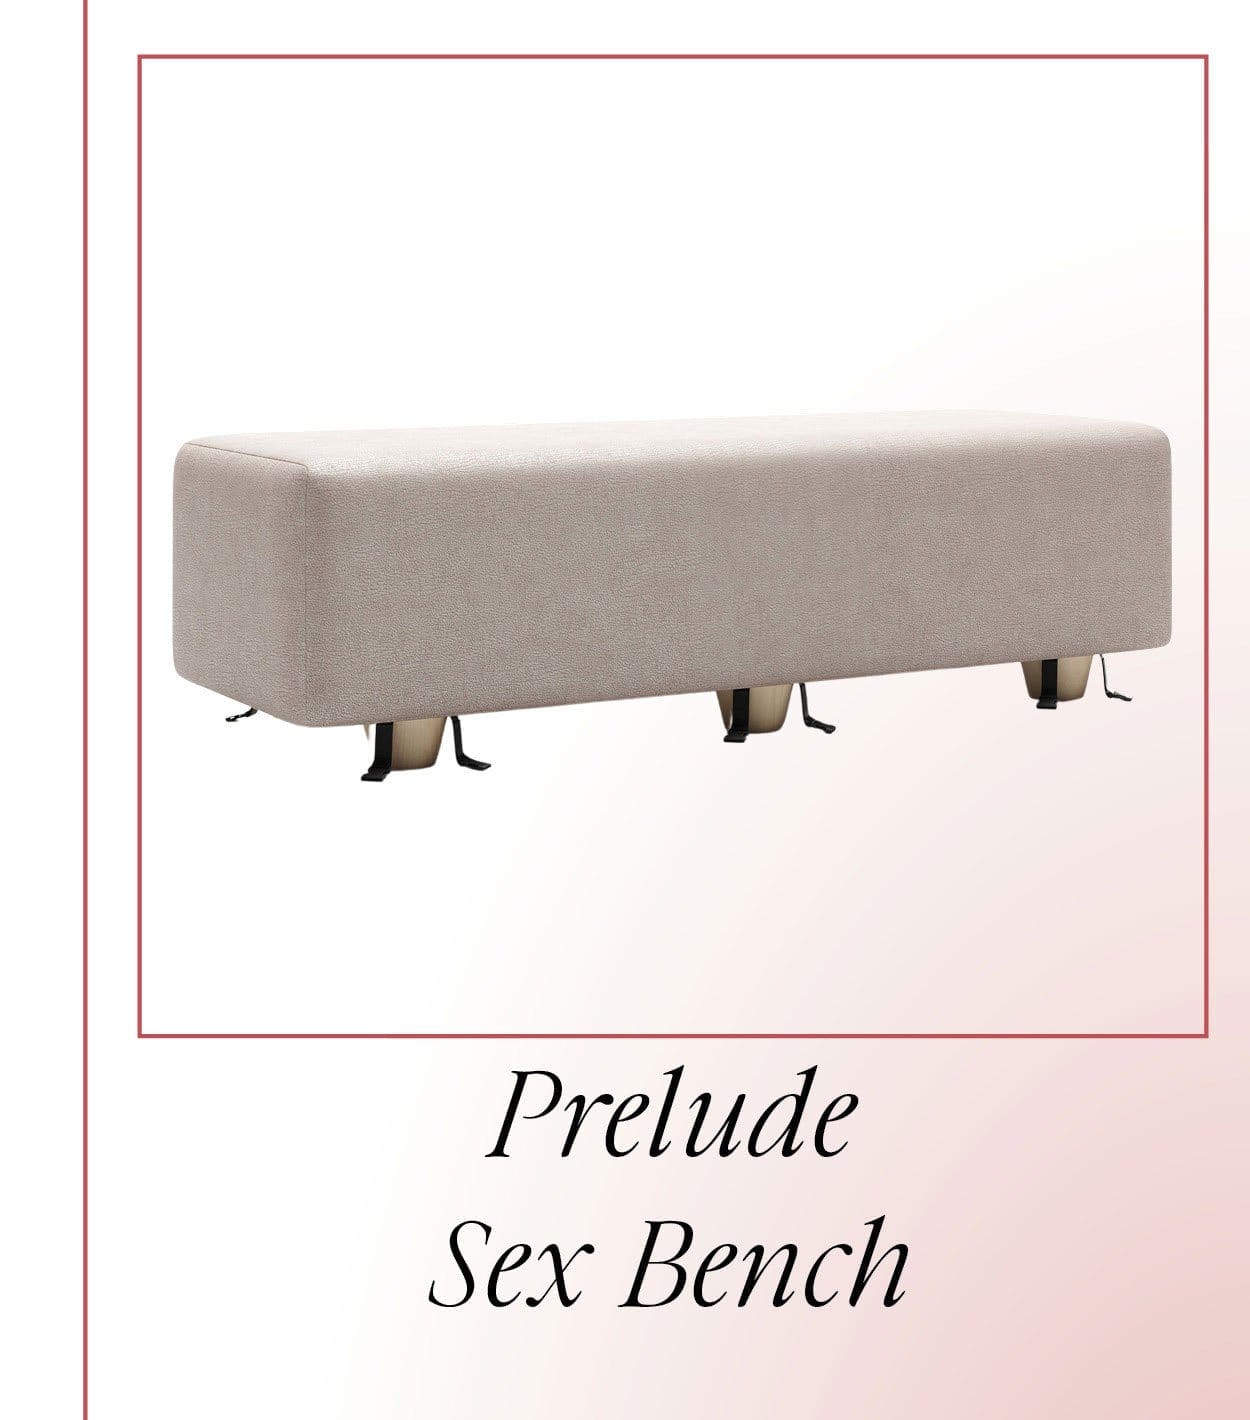 Black Label Prelude Sex Bench